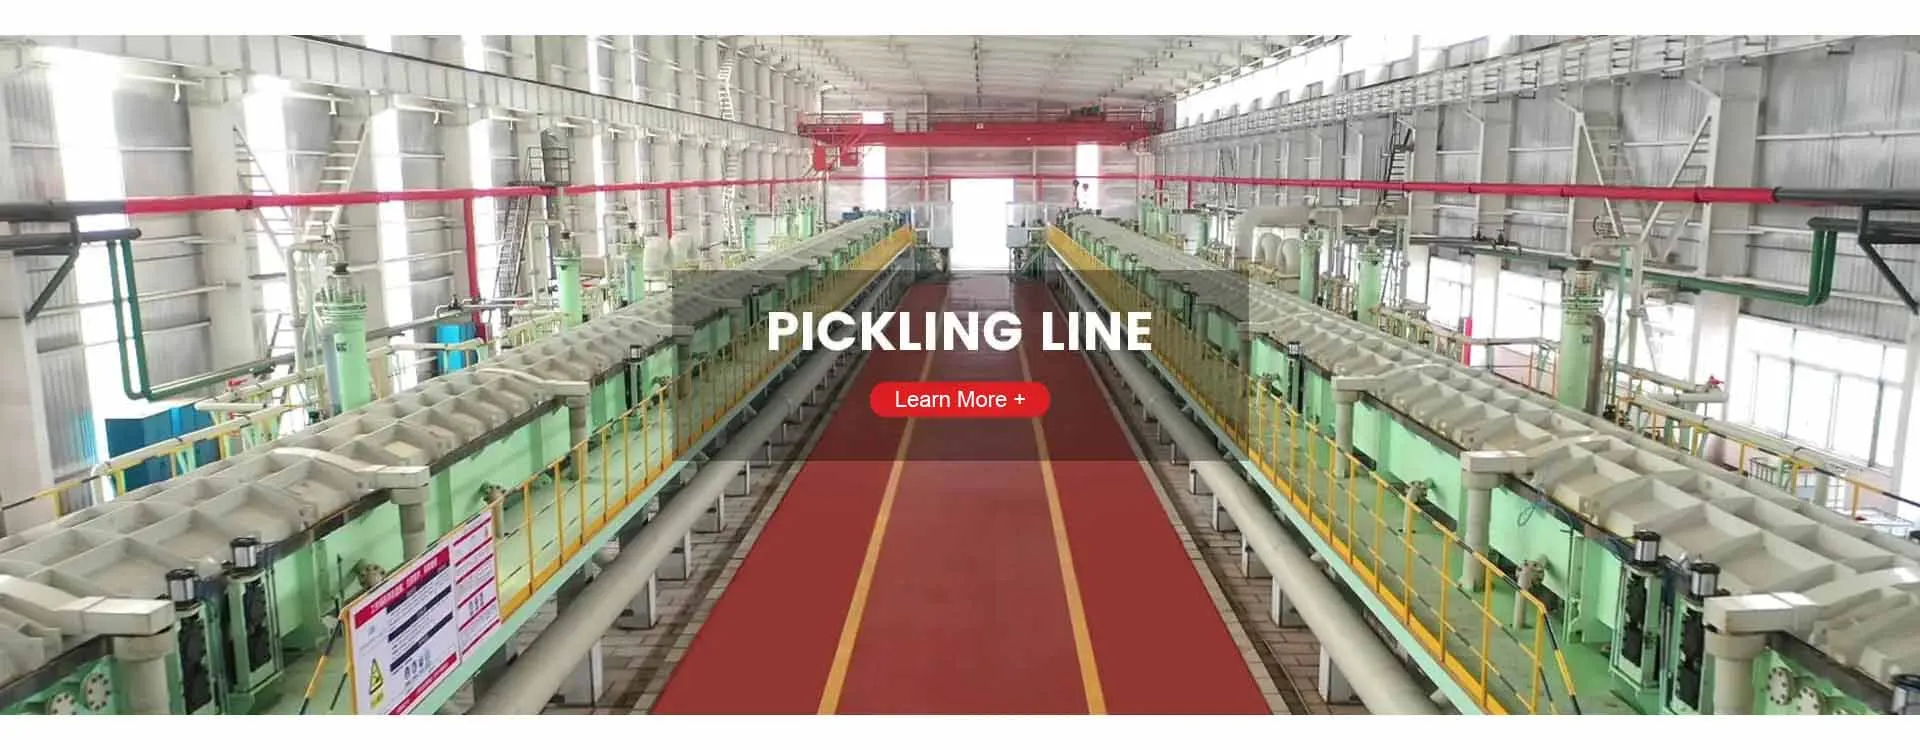 Pickling Line